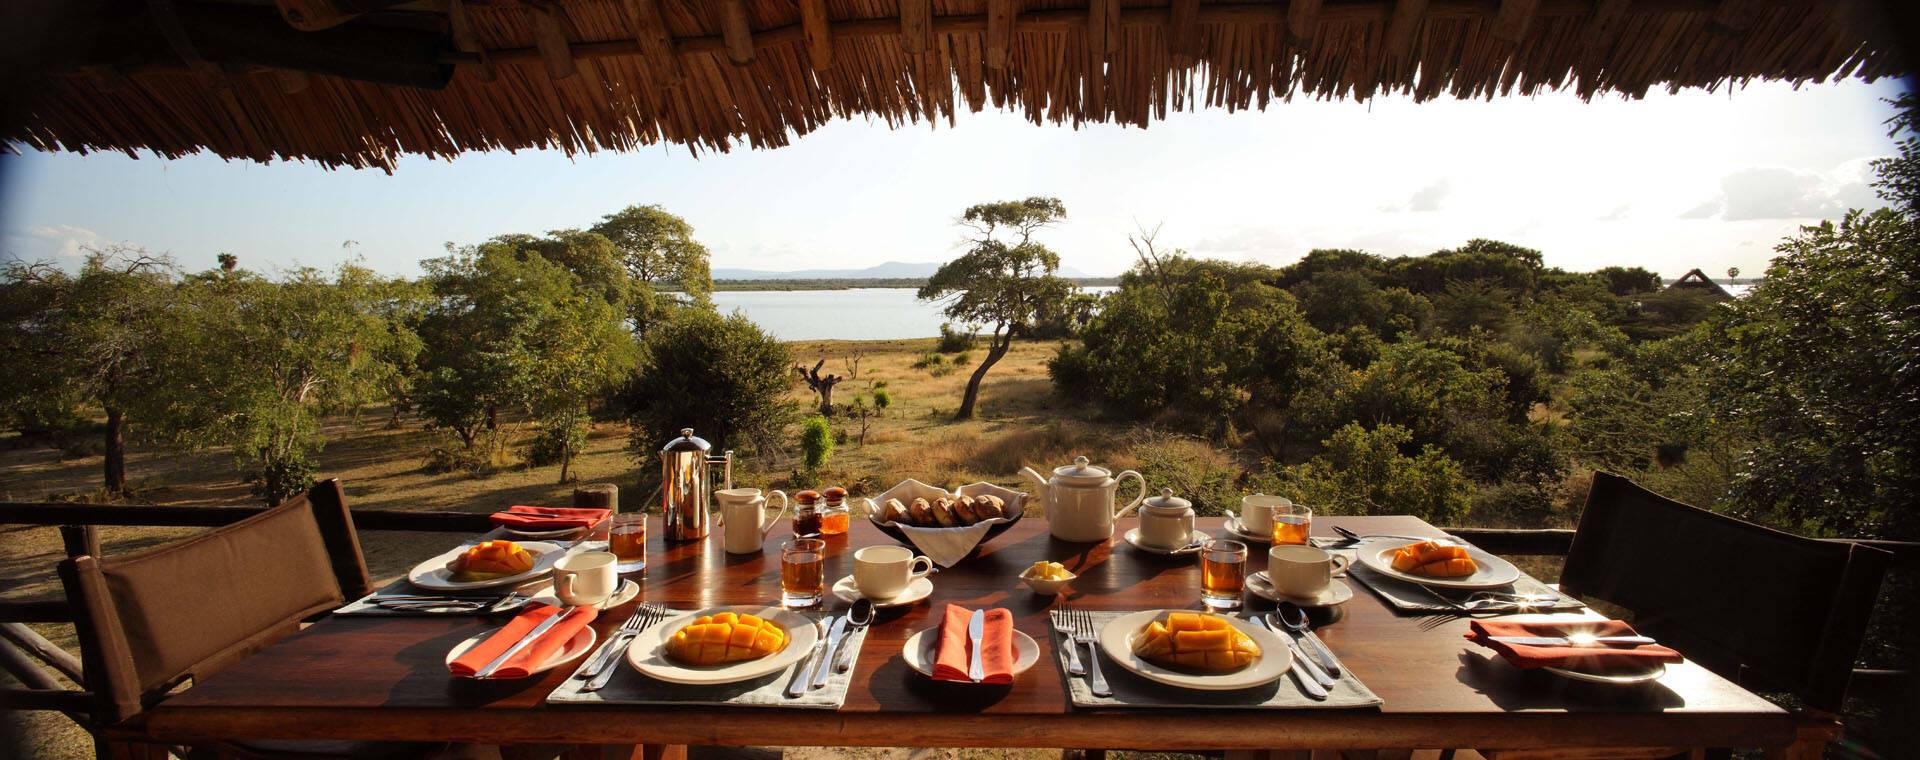 Tanzanie Siwandu Camp Petit Dejeuner